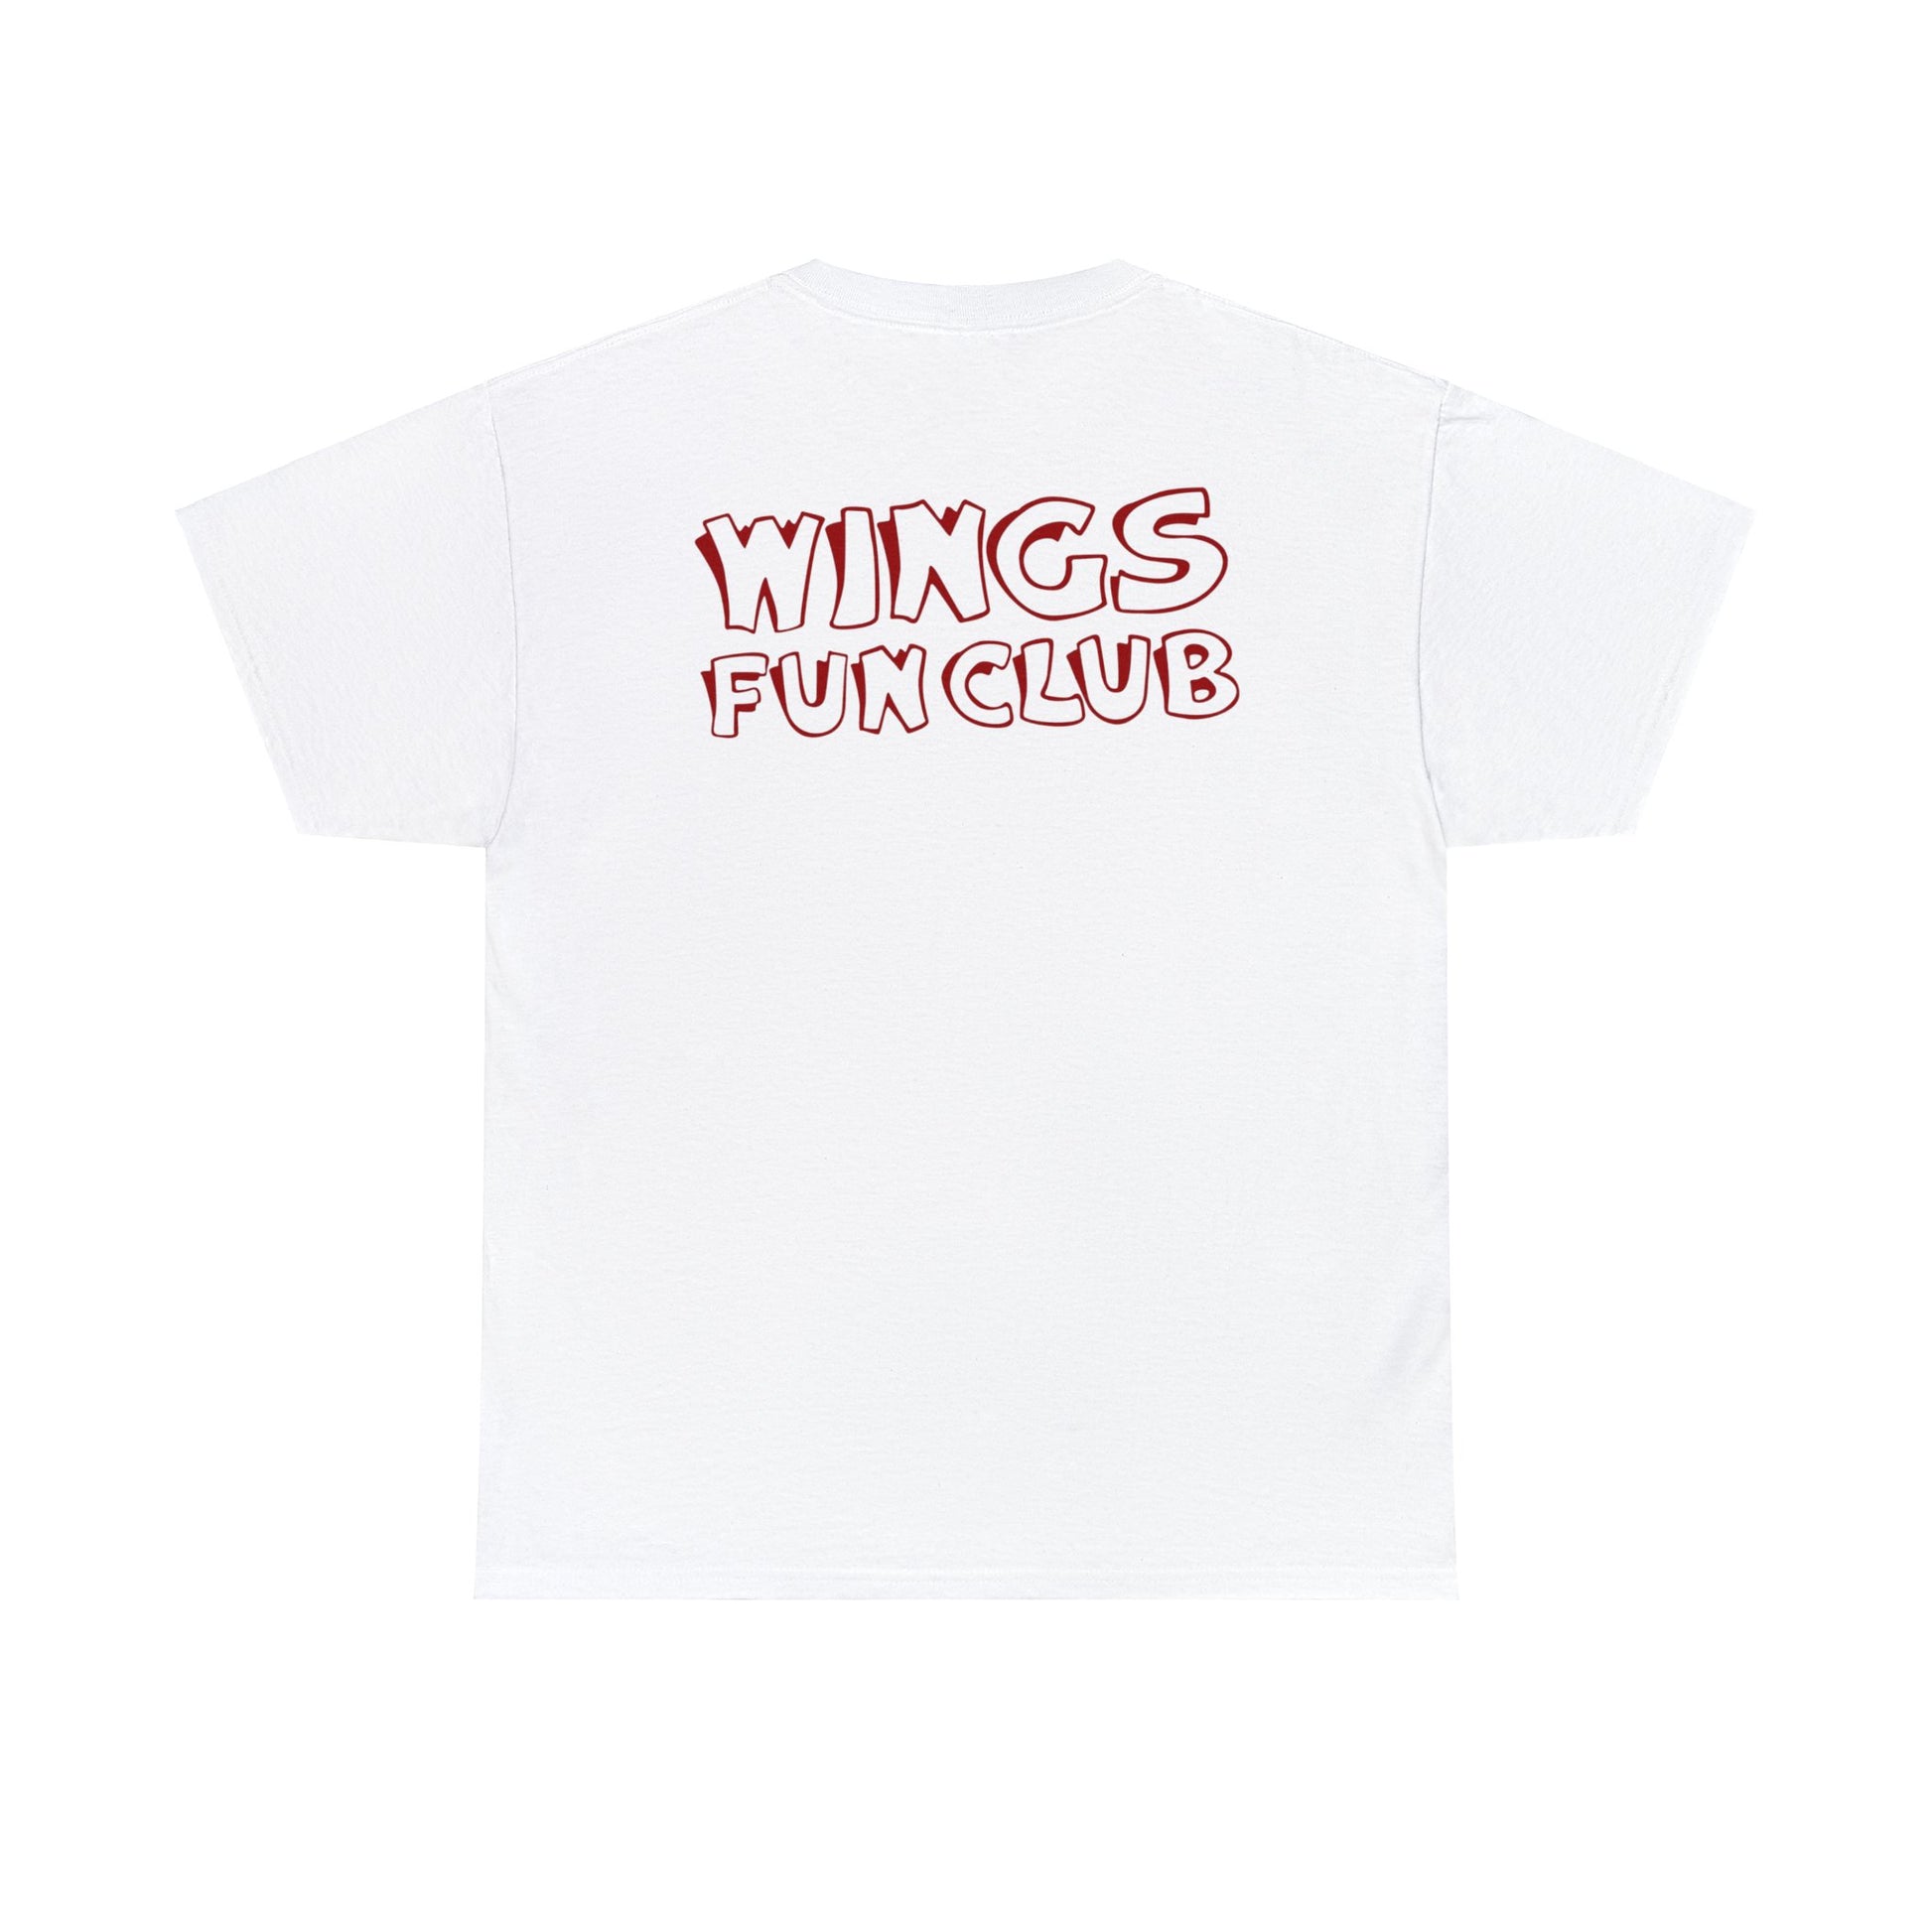 Paul McCartney Wings Fun Club Sandwich 1970 T-shirt for Sale